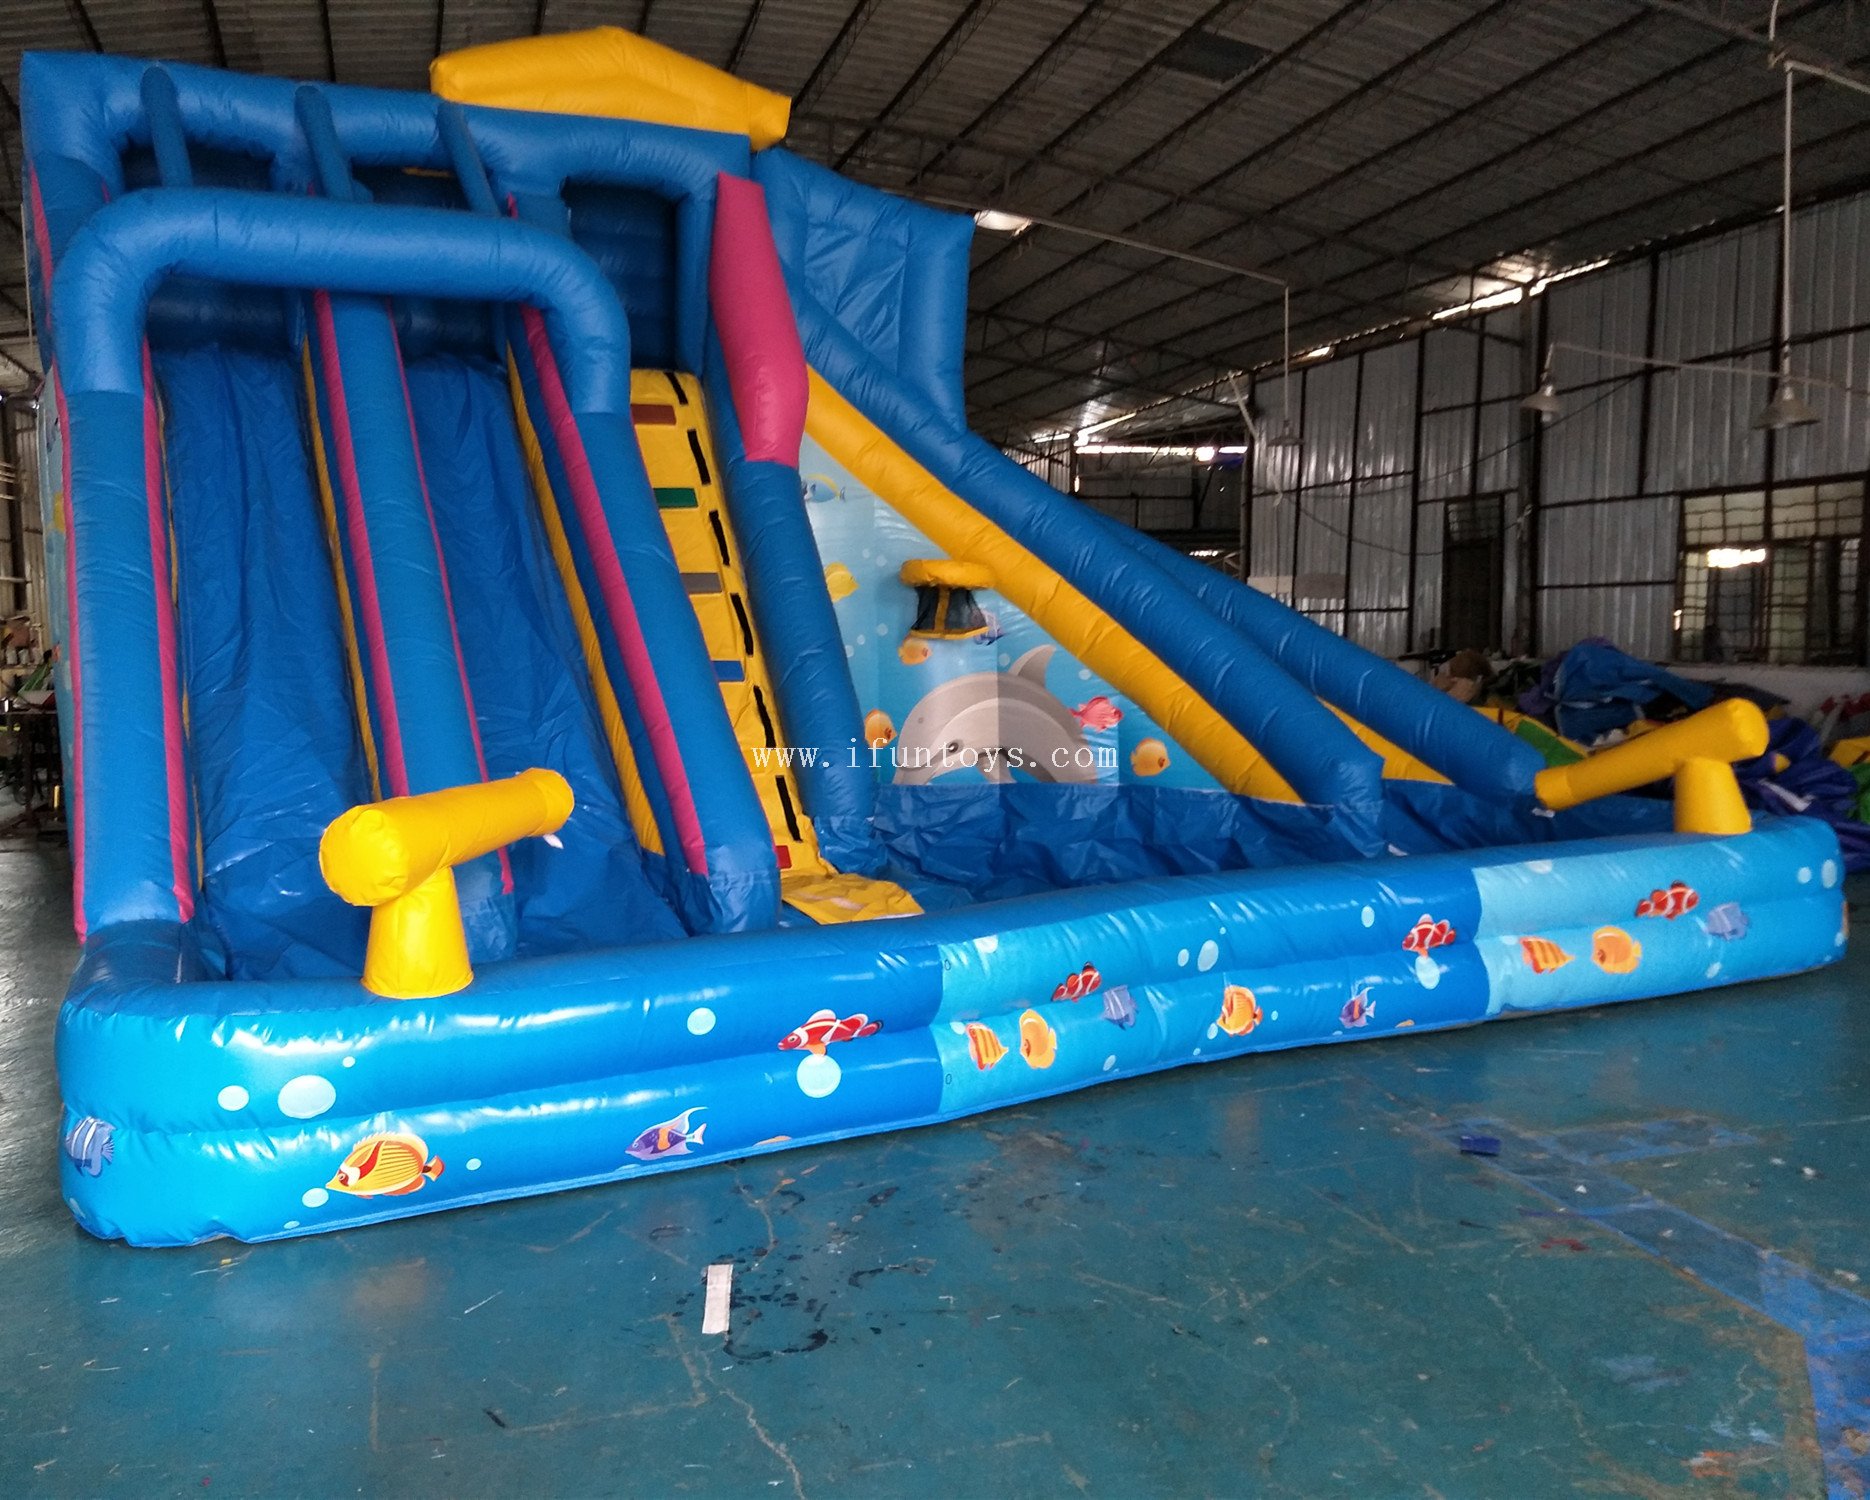 Falls Adventure Inflatable Backyard splash Water Slide and Pool/inflatable water slides with water gun for kids